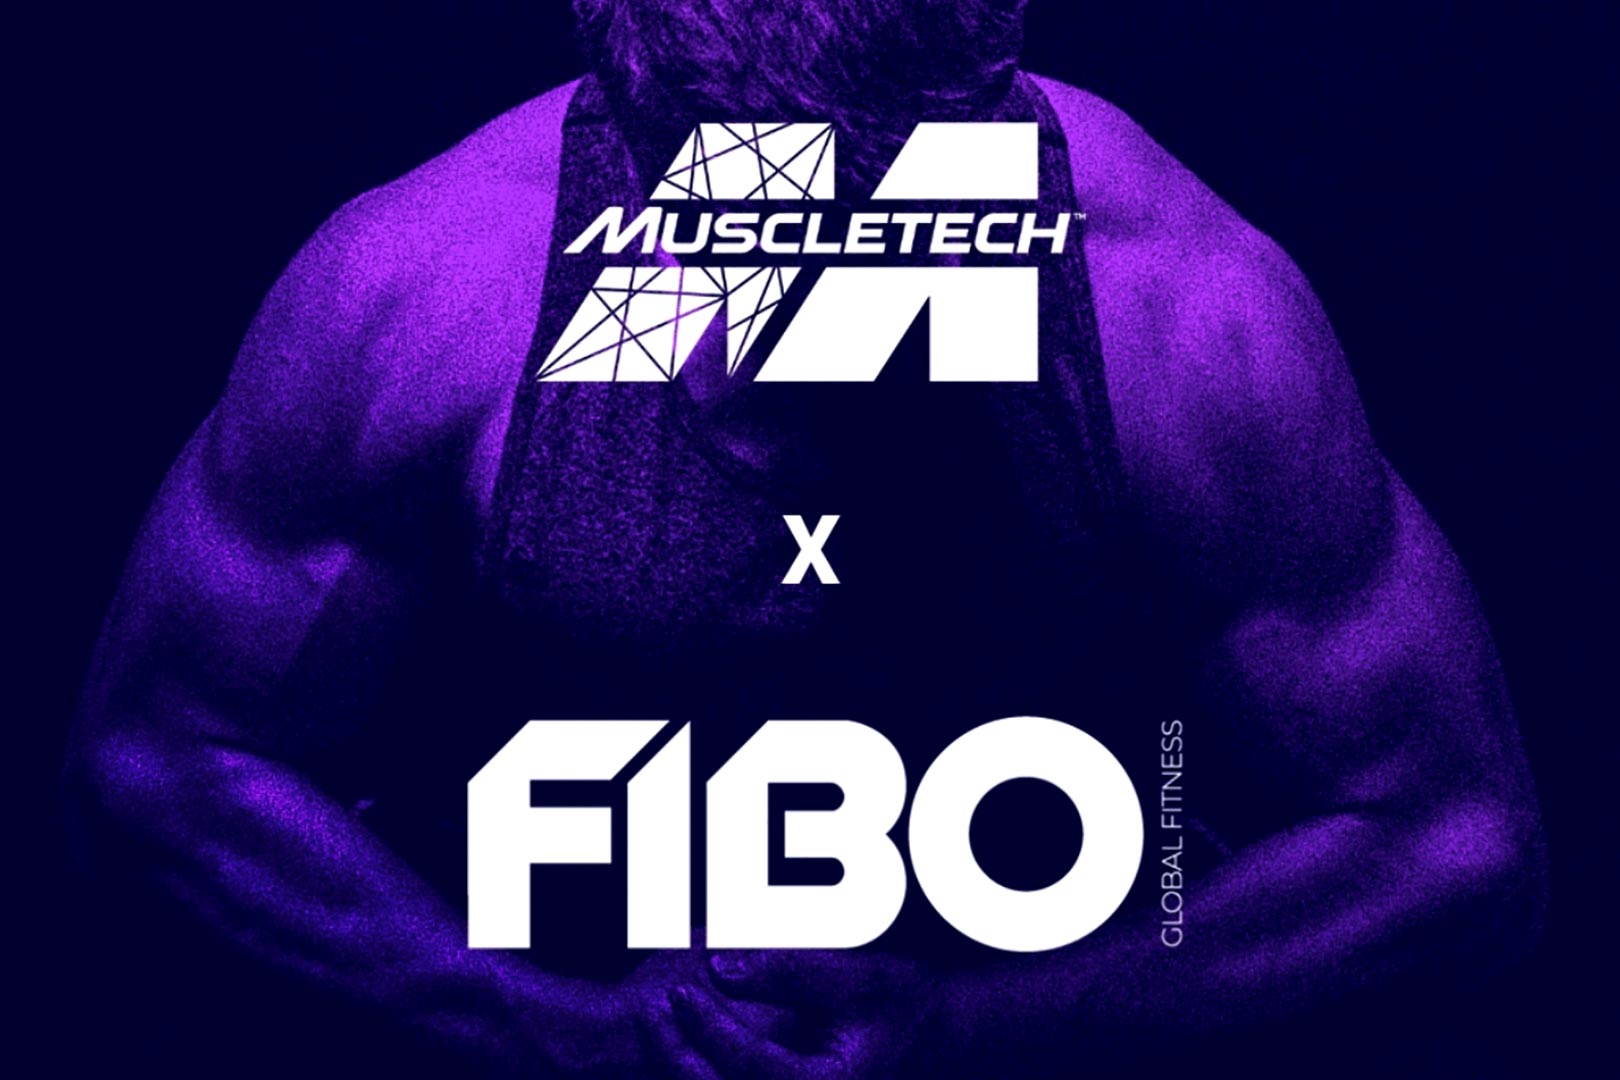 Muscletech X Fibo 2023